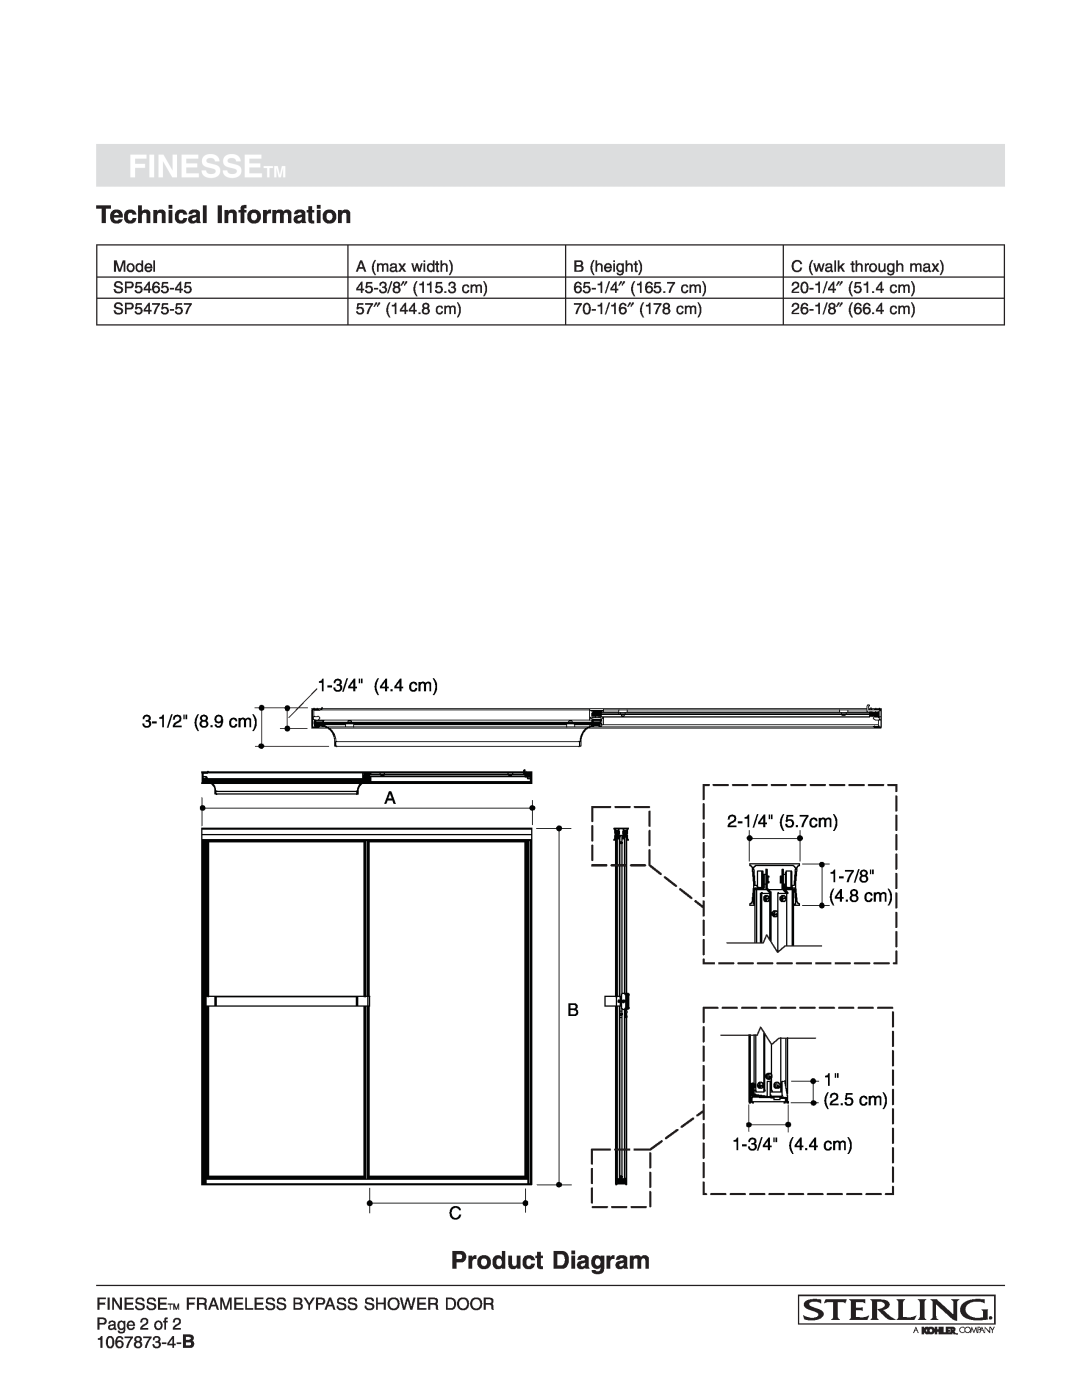 Sterling Plumbing SP5475-57 manual Technical Information, Product Diagram, Finessetm, 1-3/4 4.4 cm, 3-1/2 8.9 cm, 4.8 cm 